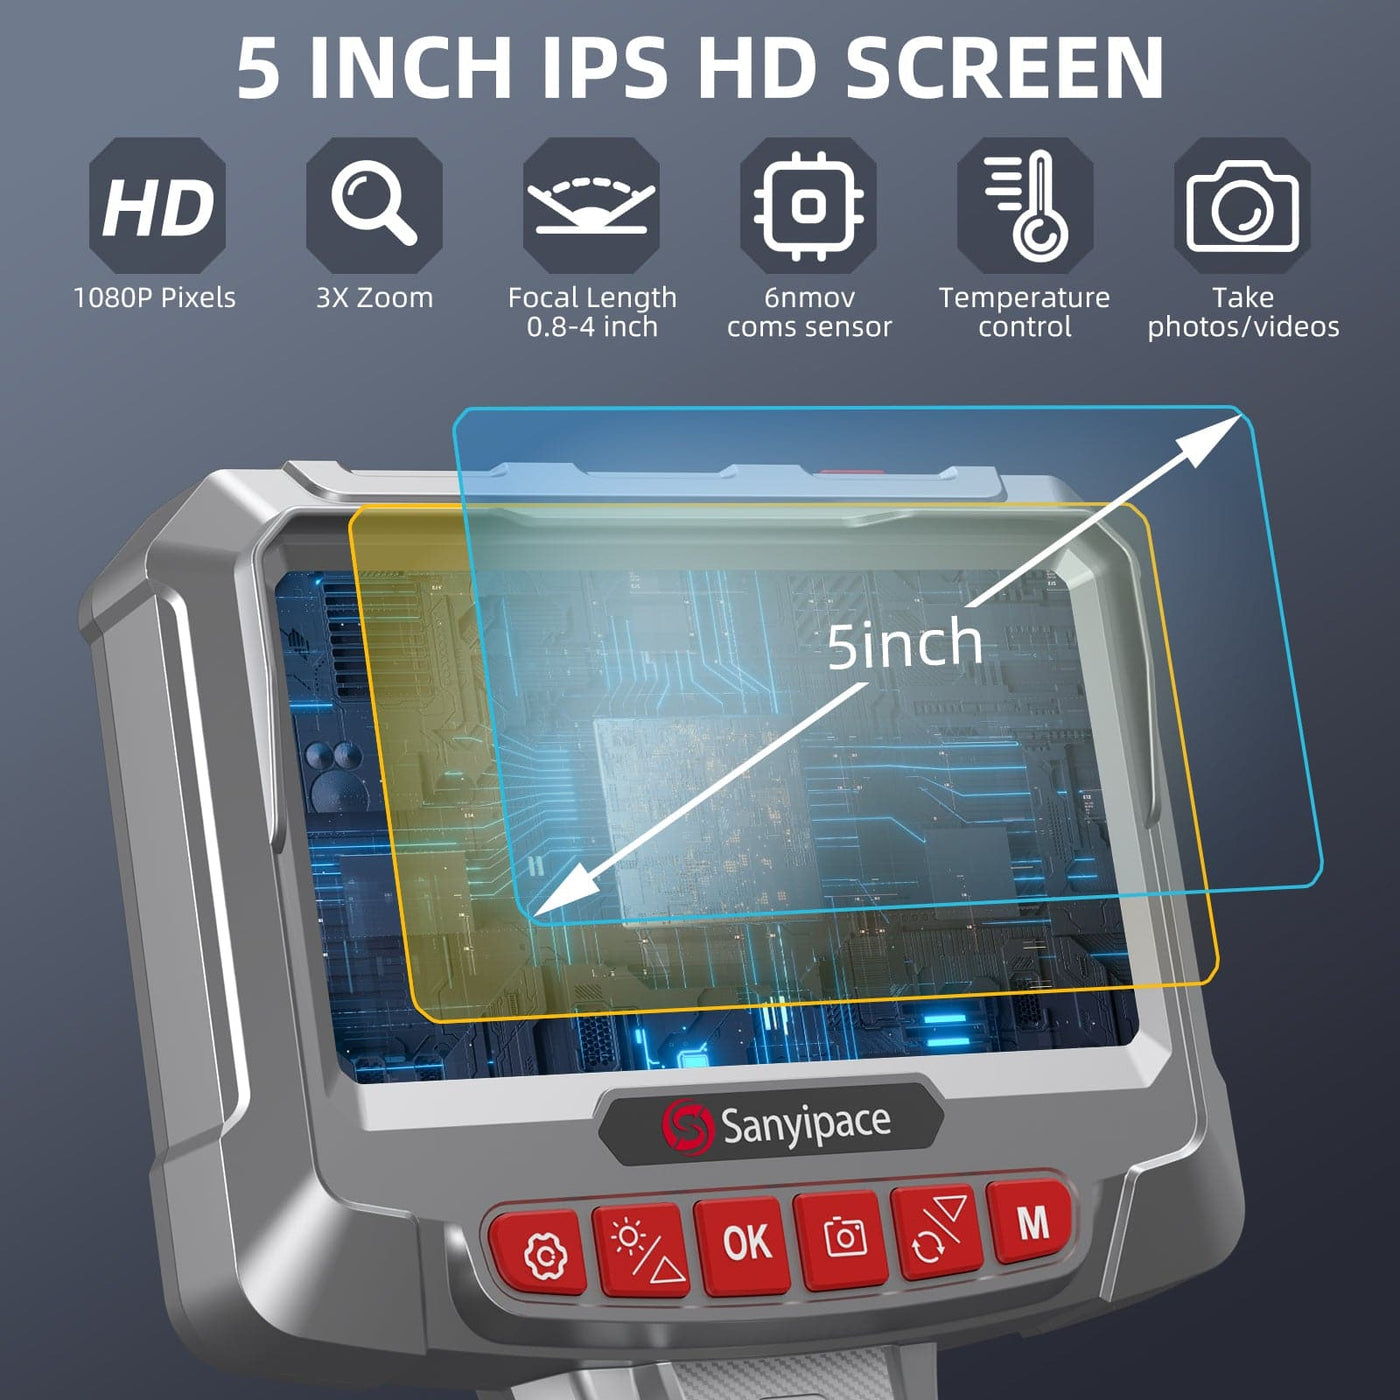 5 Inch IPS HD Screen